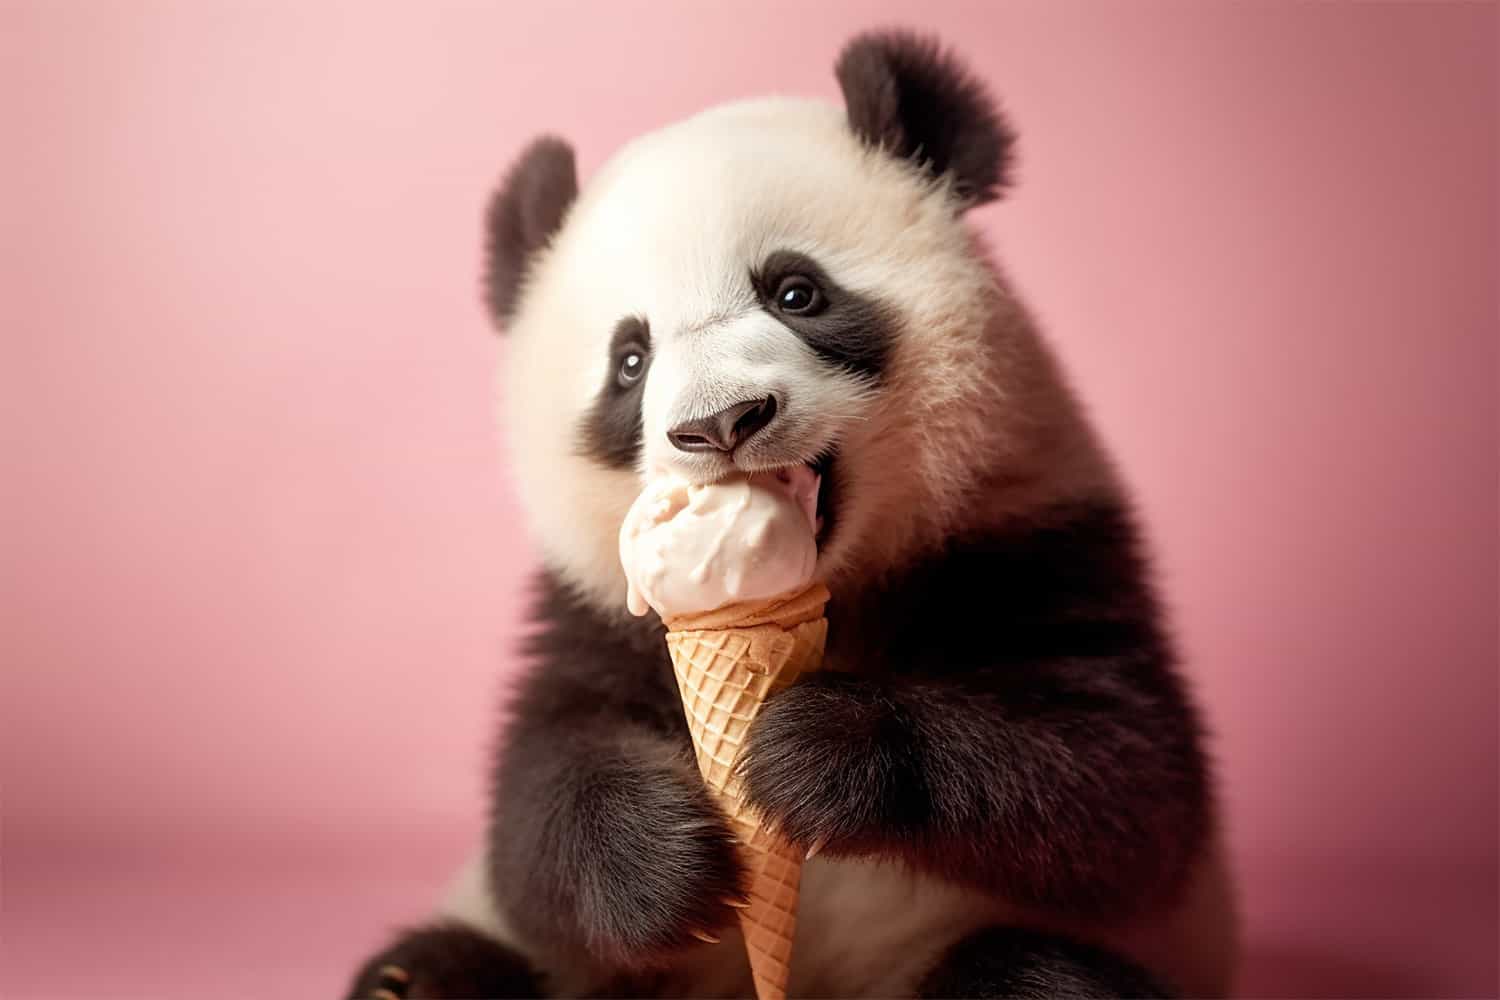 A panda eating ice cream